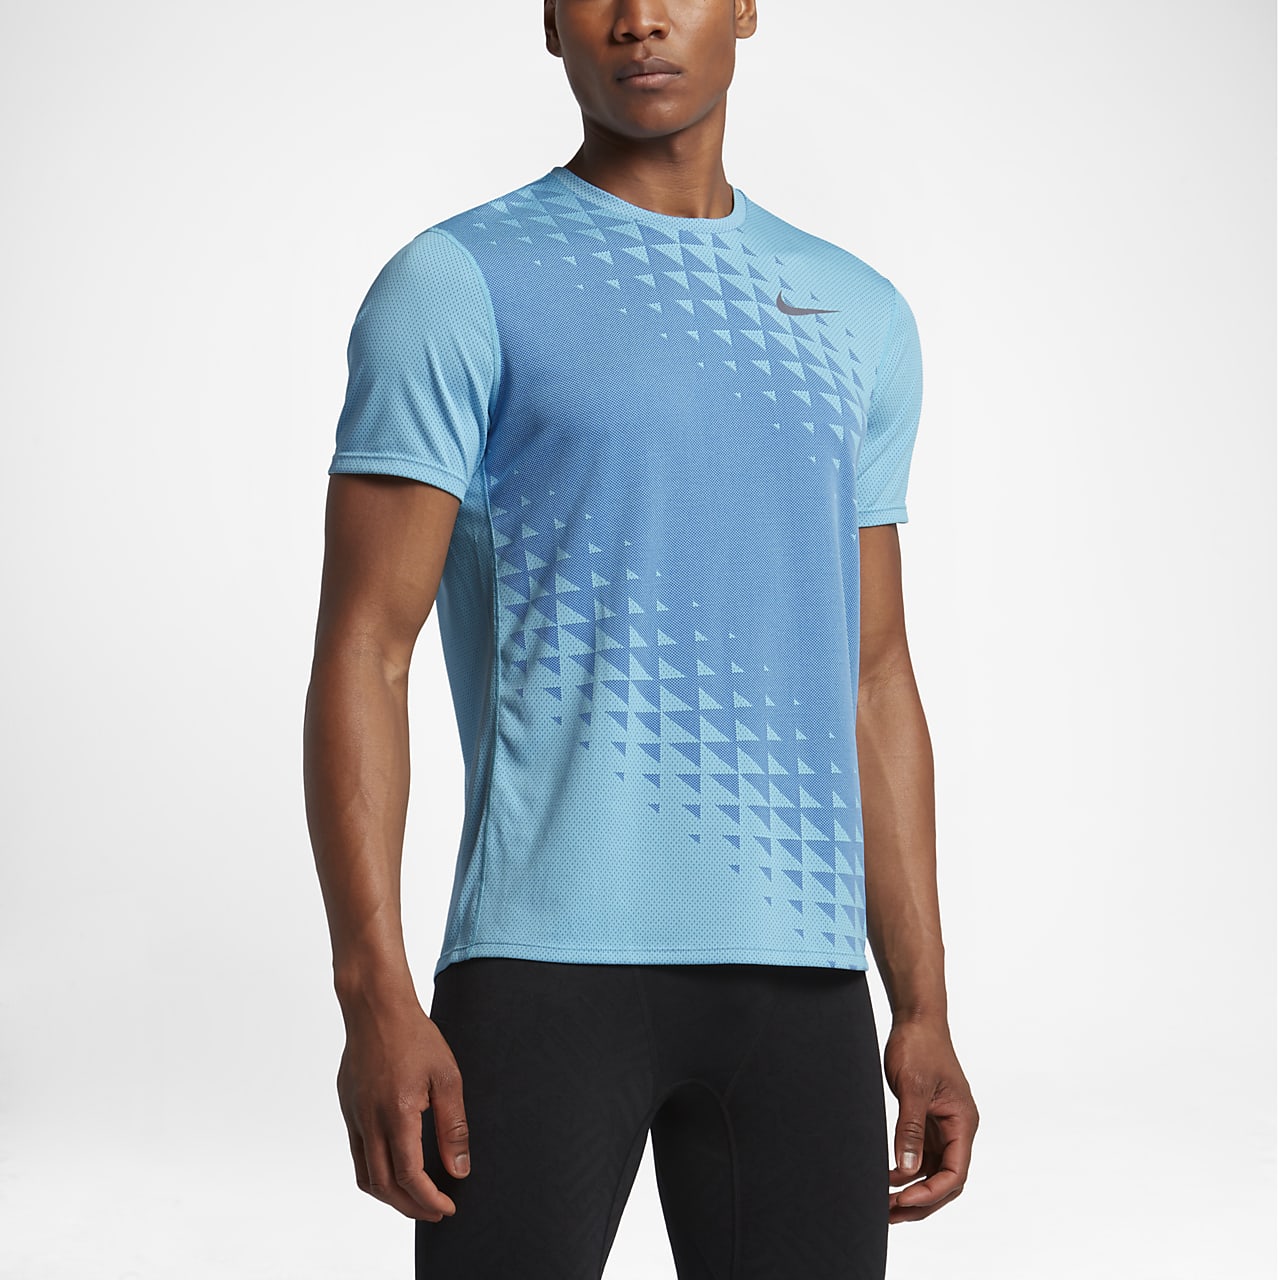 Gracias por tu ayuda Agarrar Miau miau Nike Zonal Cooling Relay Graphic Men's Short-Sleeve Running Top. Nike SG